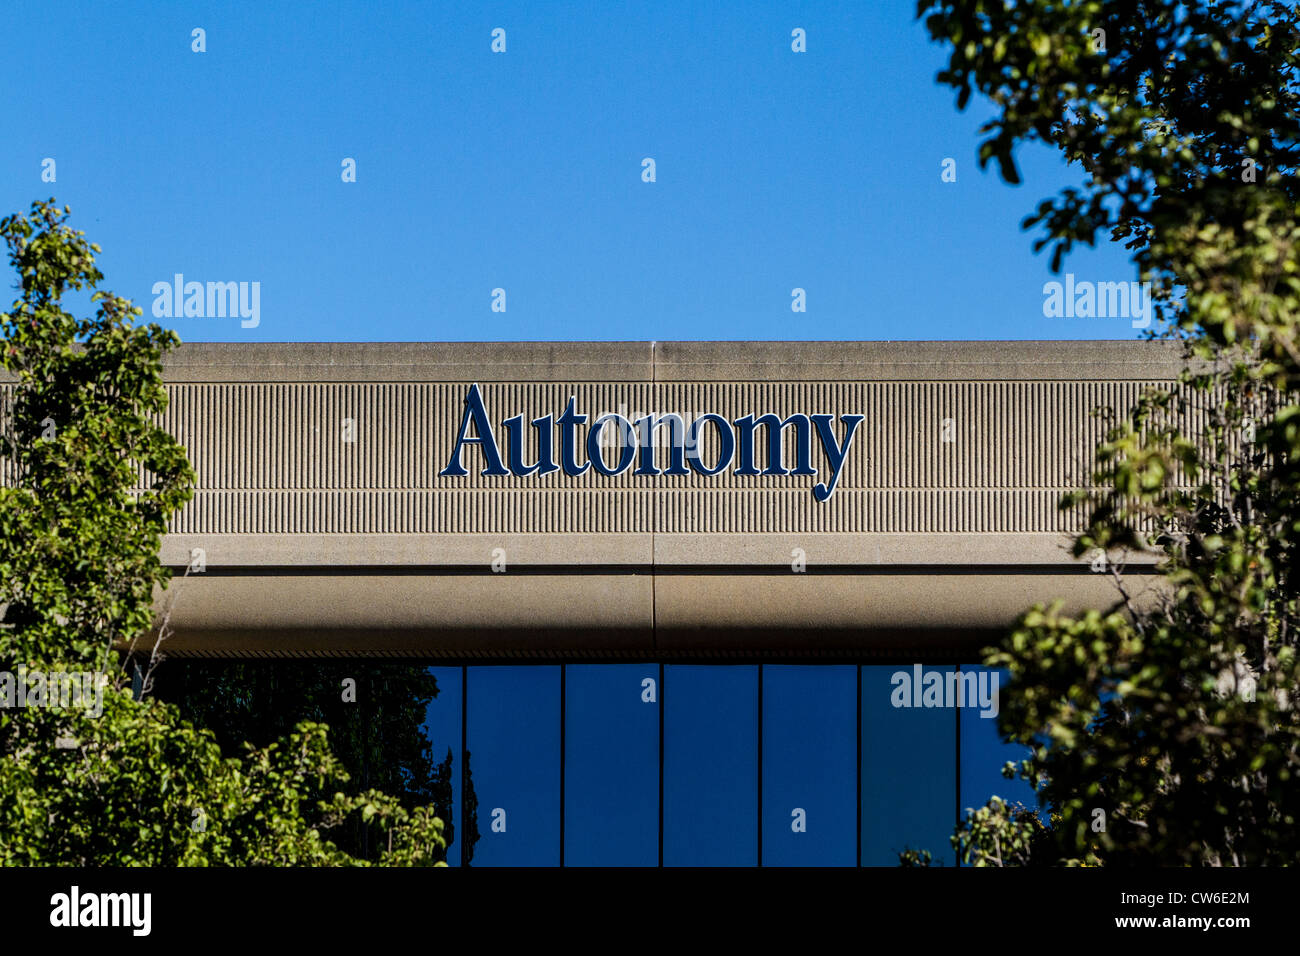 Autonomy Building and sign in The Silicon Valley, Snata Clara, California Stock Photo